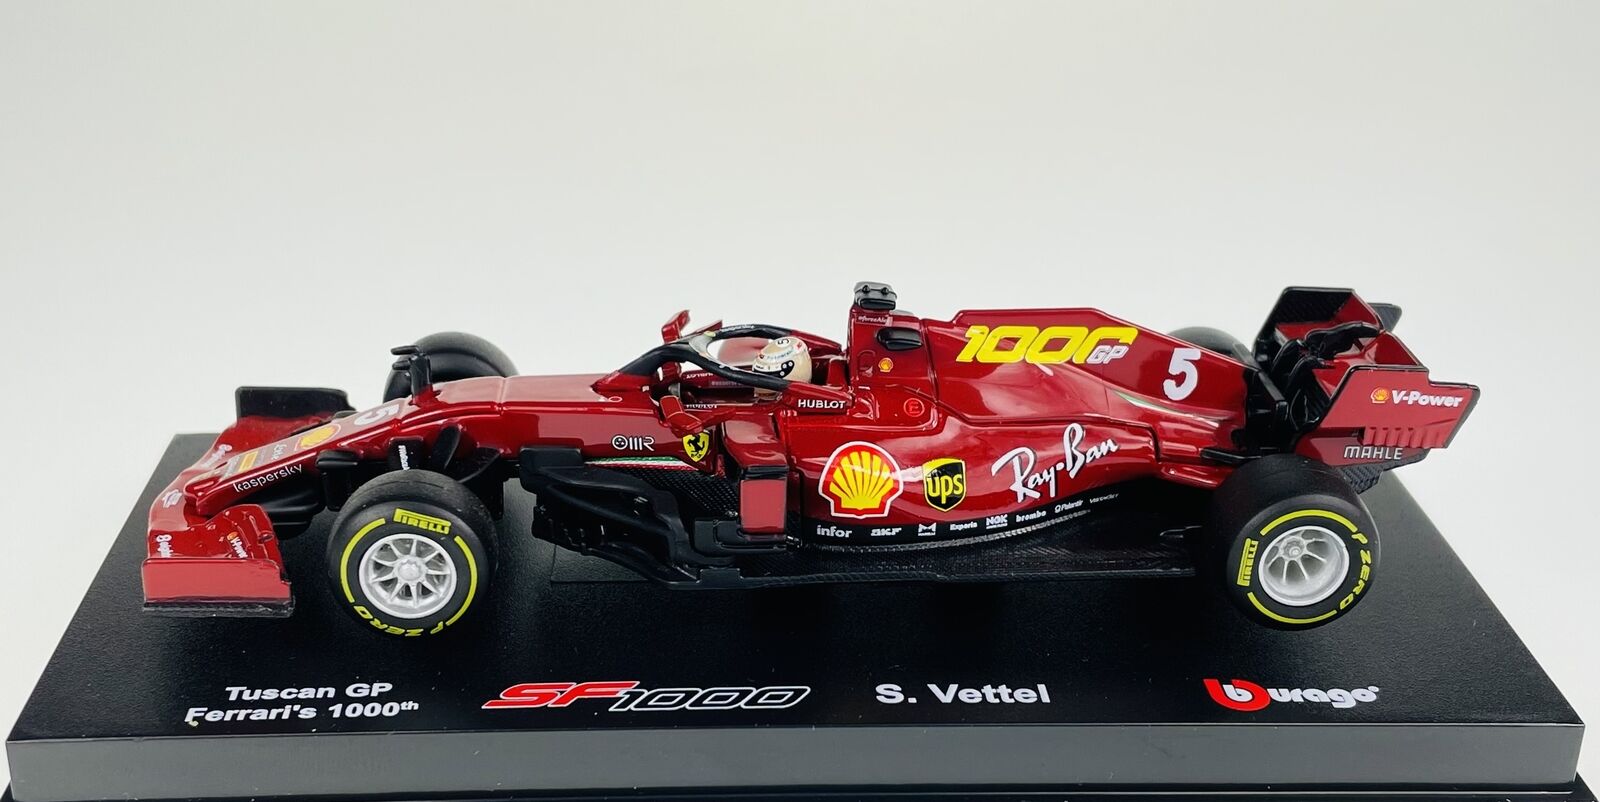 Bburago Racing F1 2020 1:43 Ferrari SF1000 with driver S.Vettel + Showcase